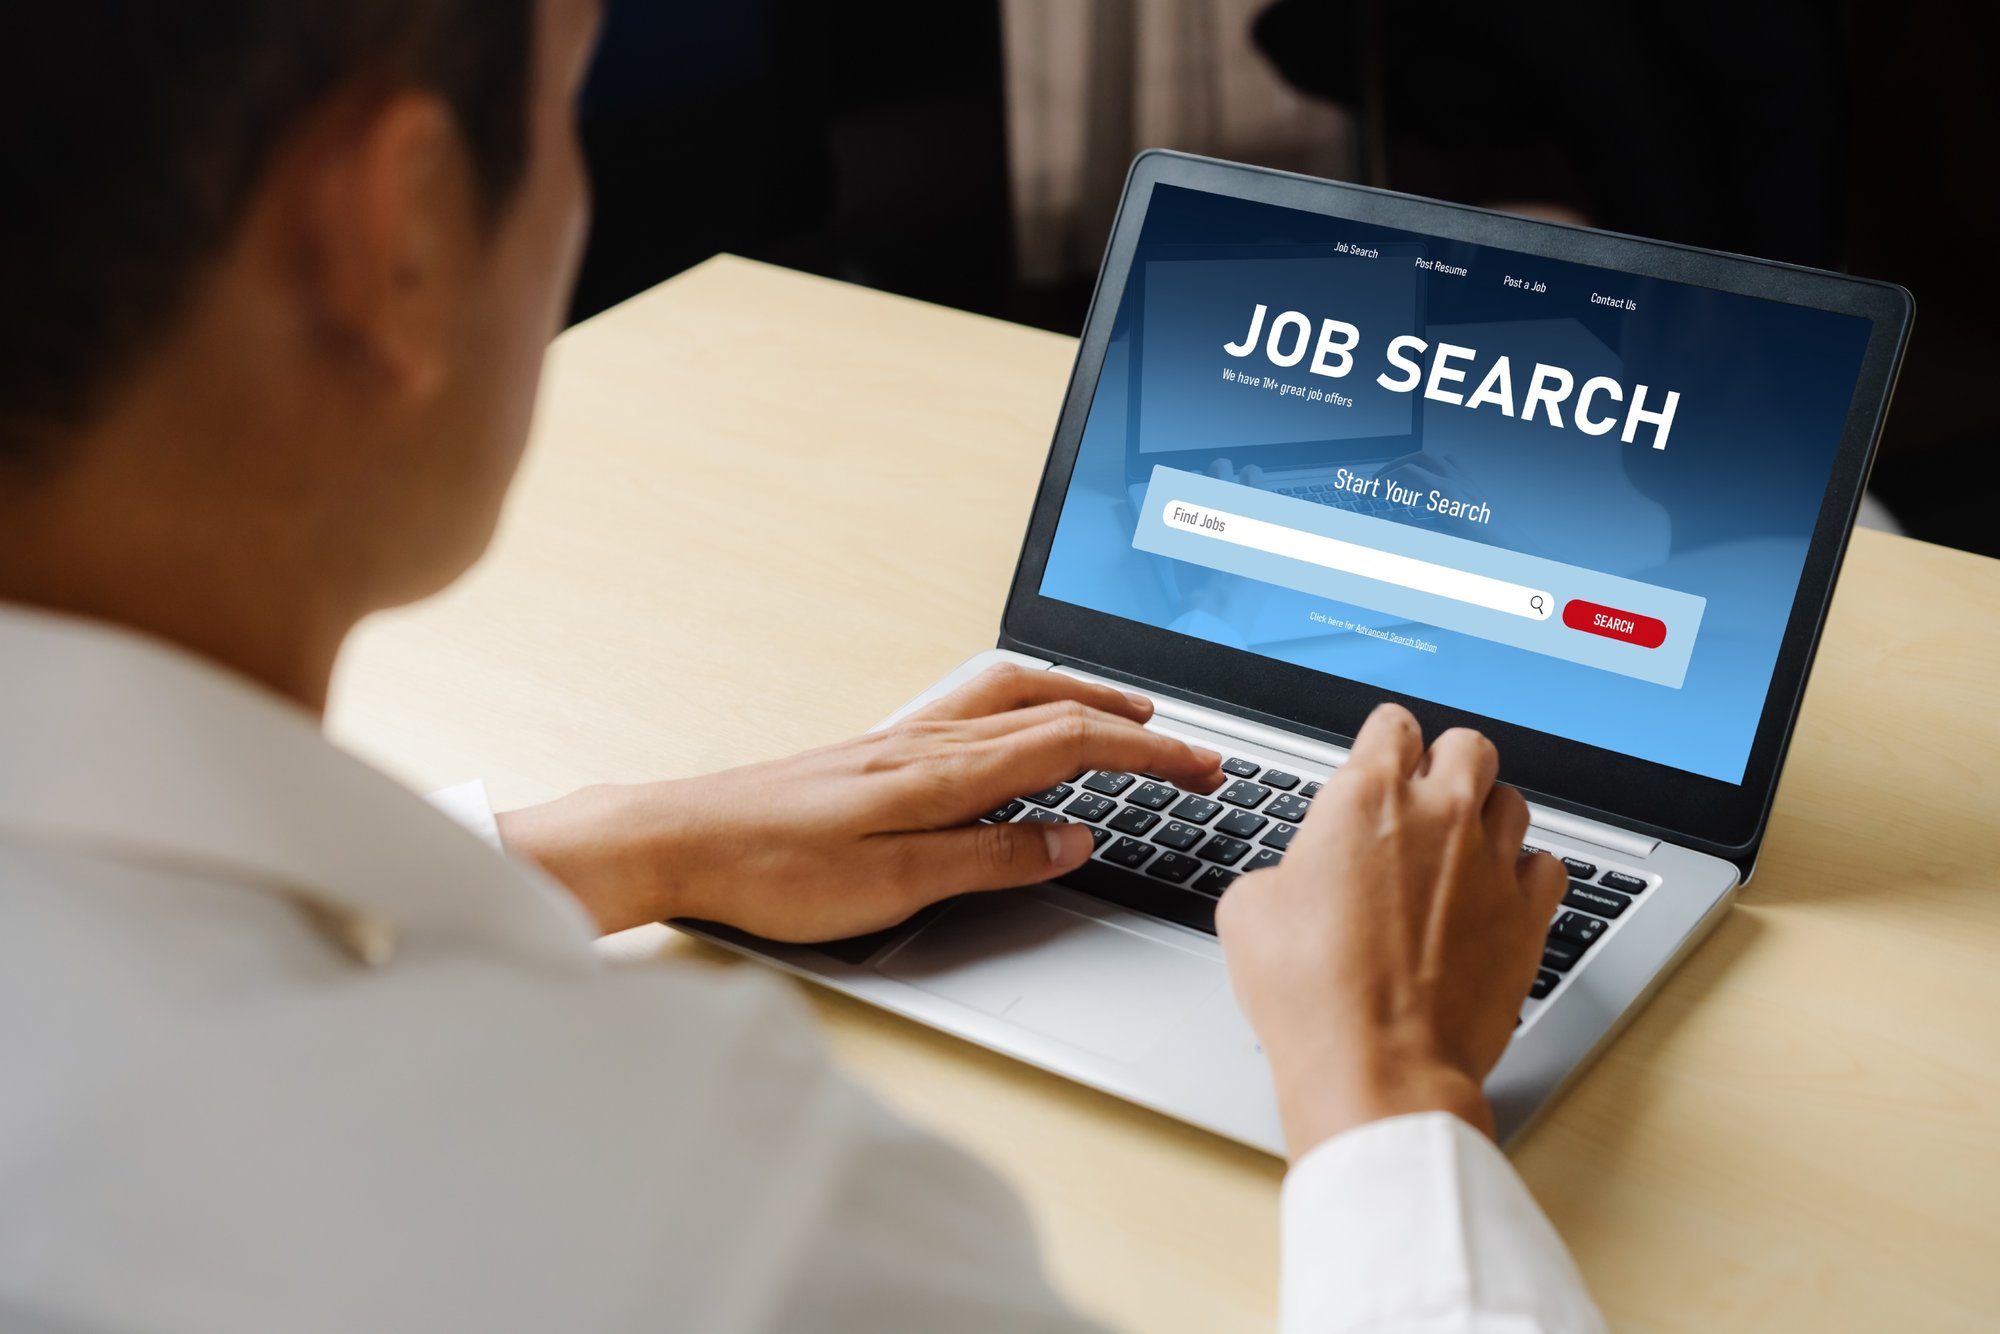 online-job-search-modish-website-worker-search-job-opportunities